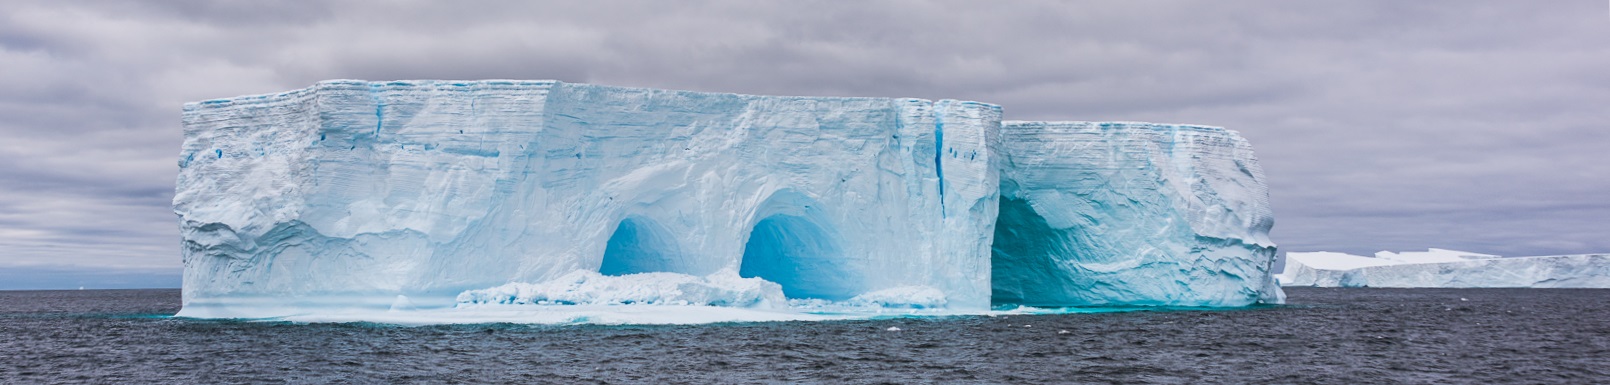 Barry Dench: Iceberg